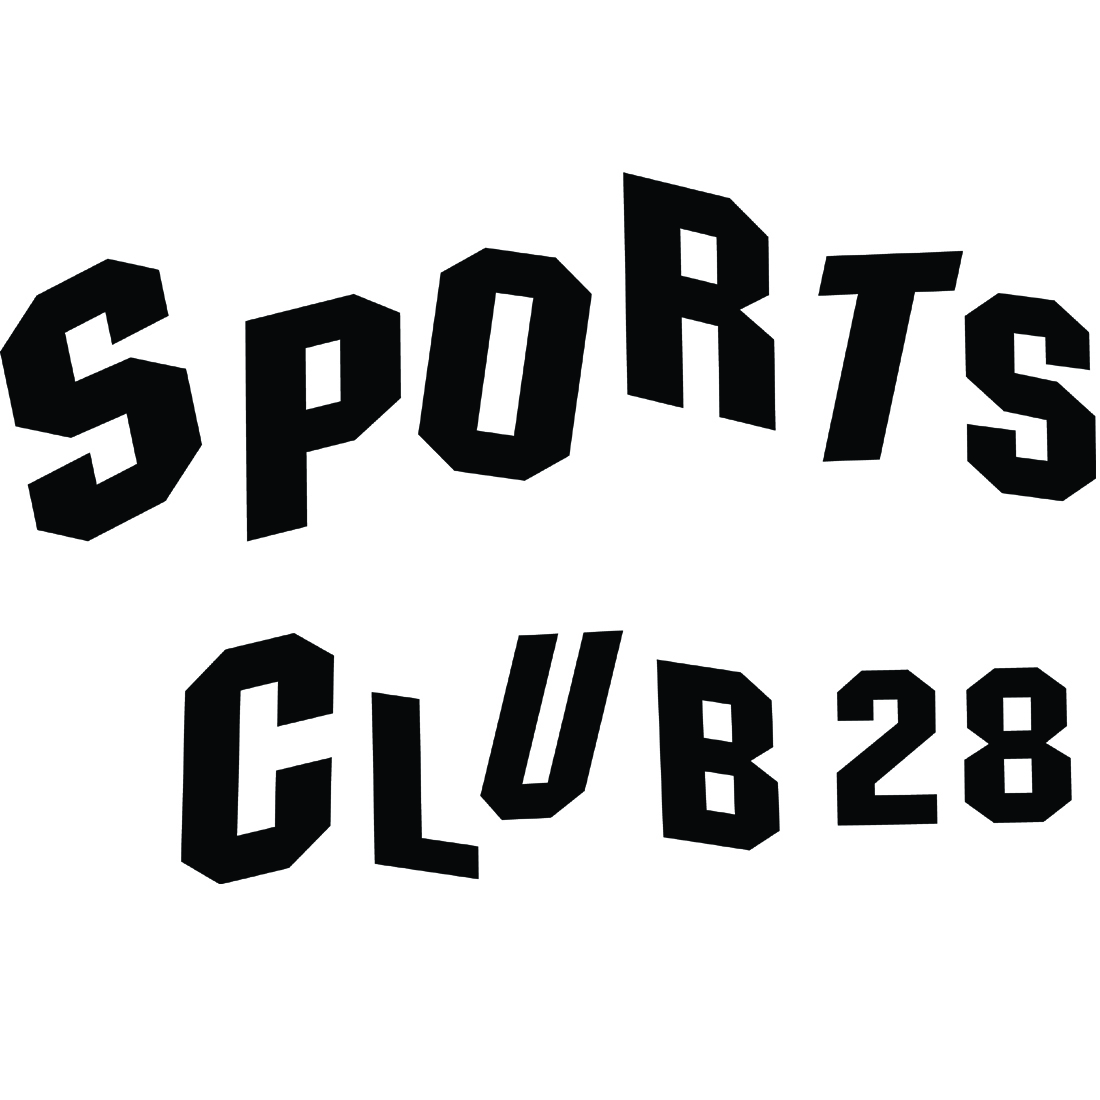 Sports Club 28 Club preview image.